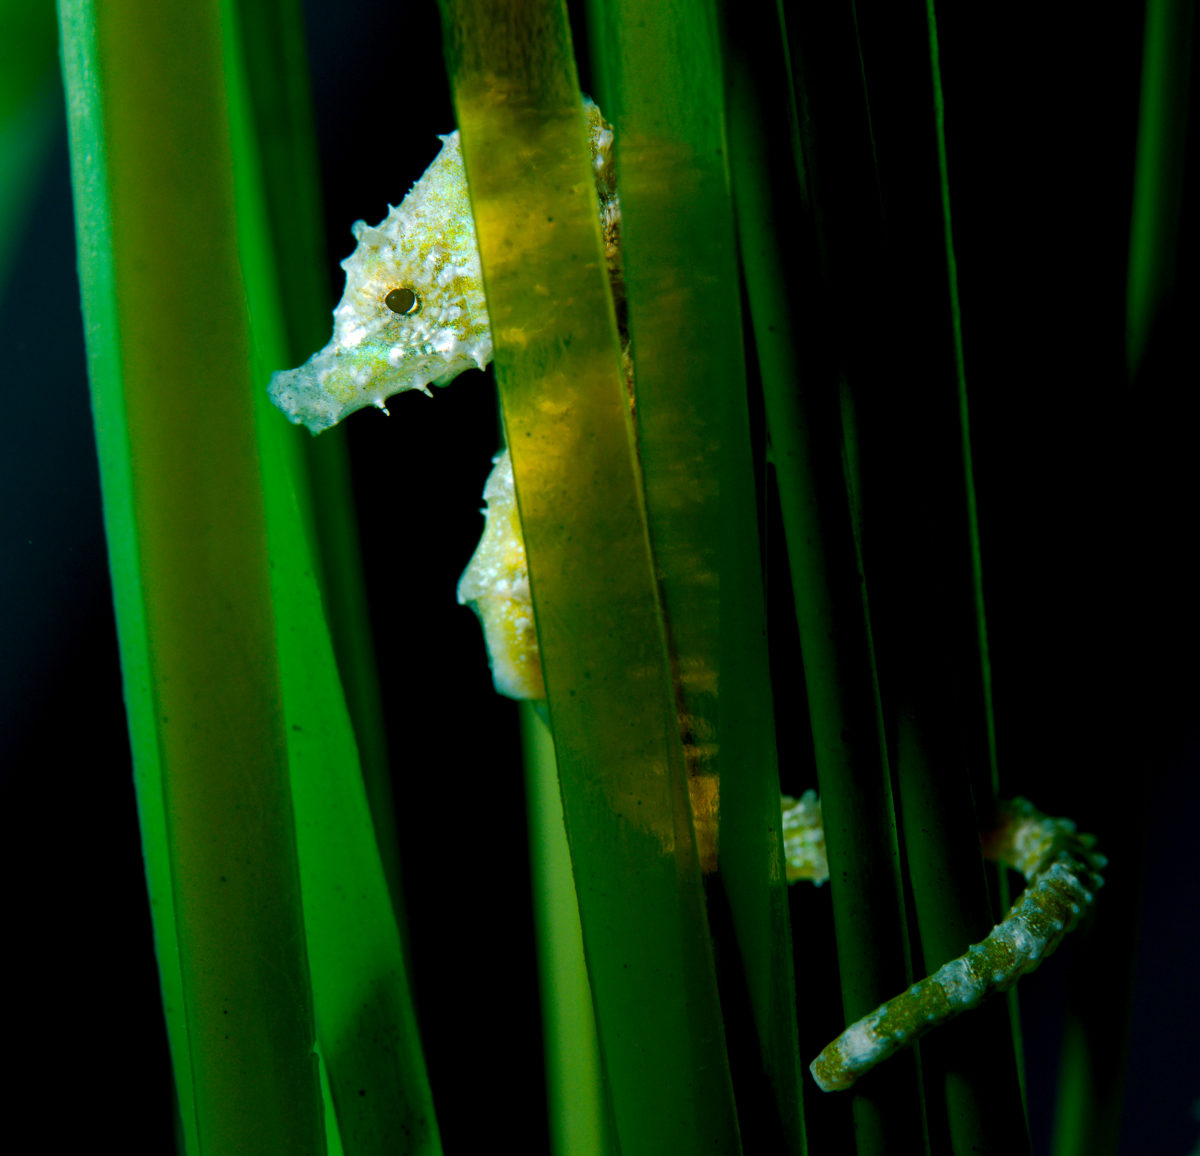 Dwarf seahorse in reeds